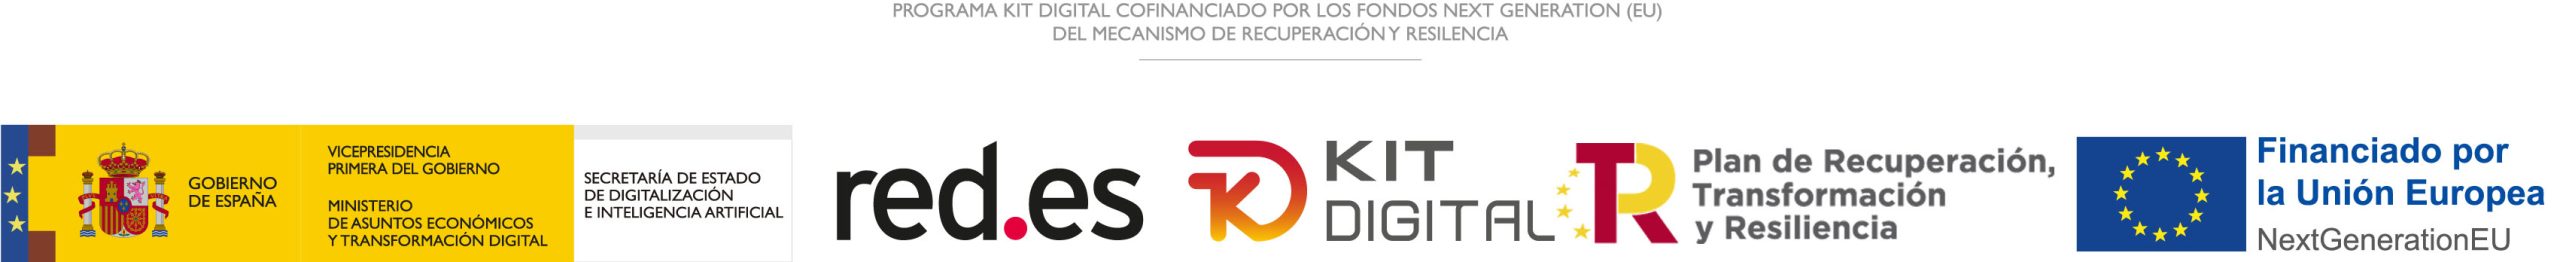 Logotipos del Kit Digital